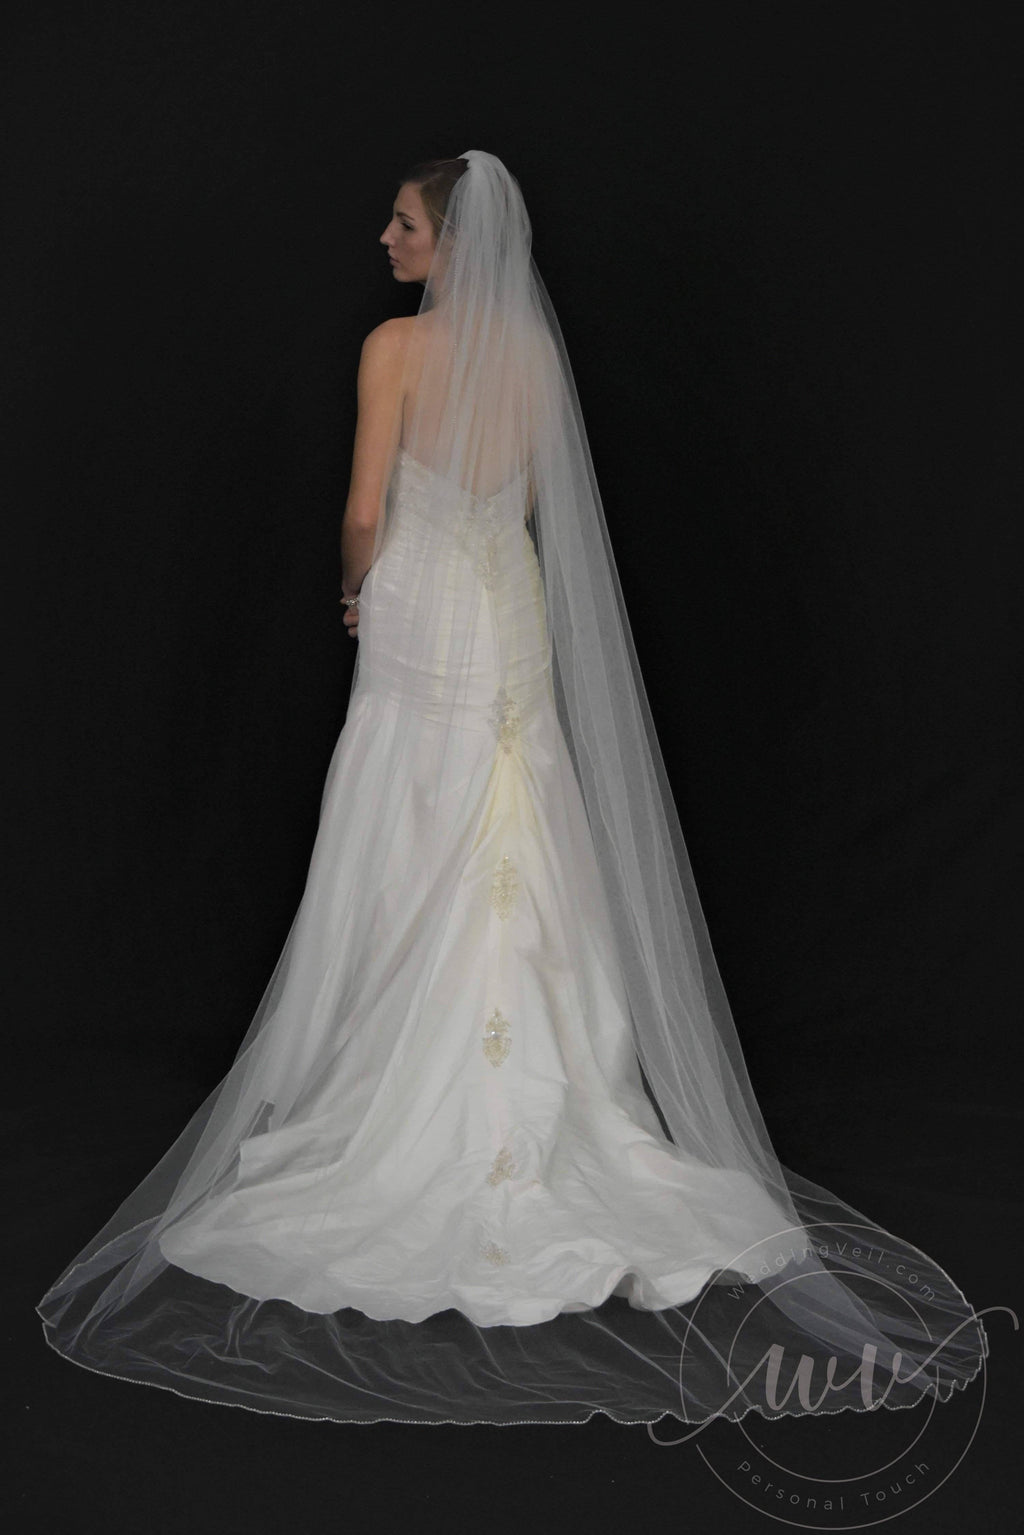 Sparkly Cathedral Wedding Veil with Rhinestone Edging - WeddingVeil.com